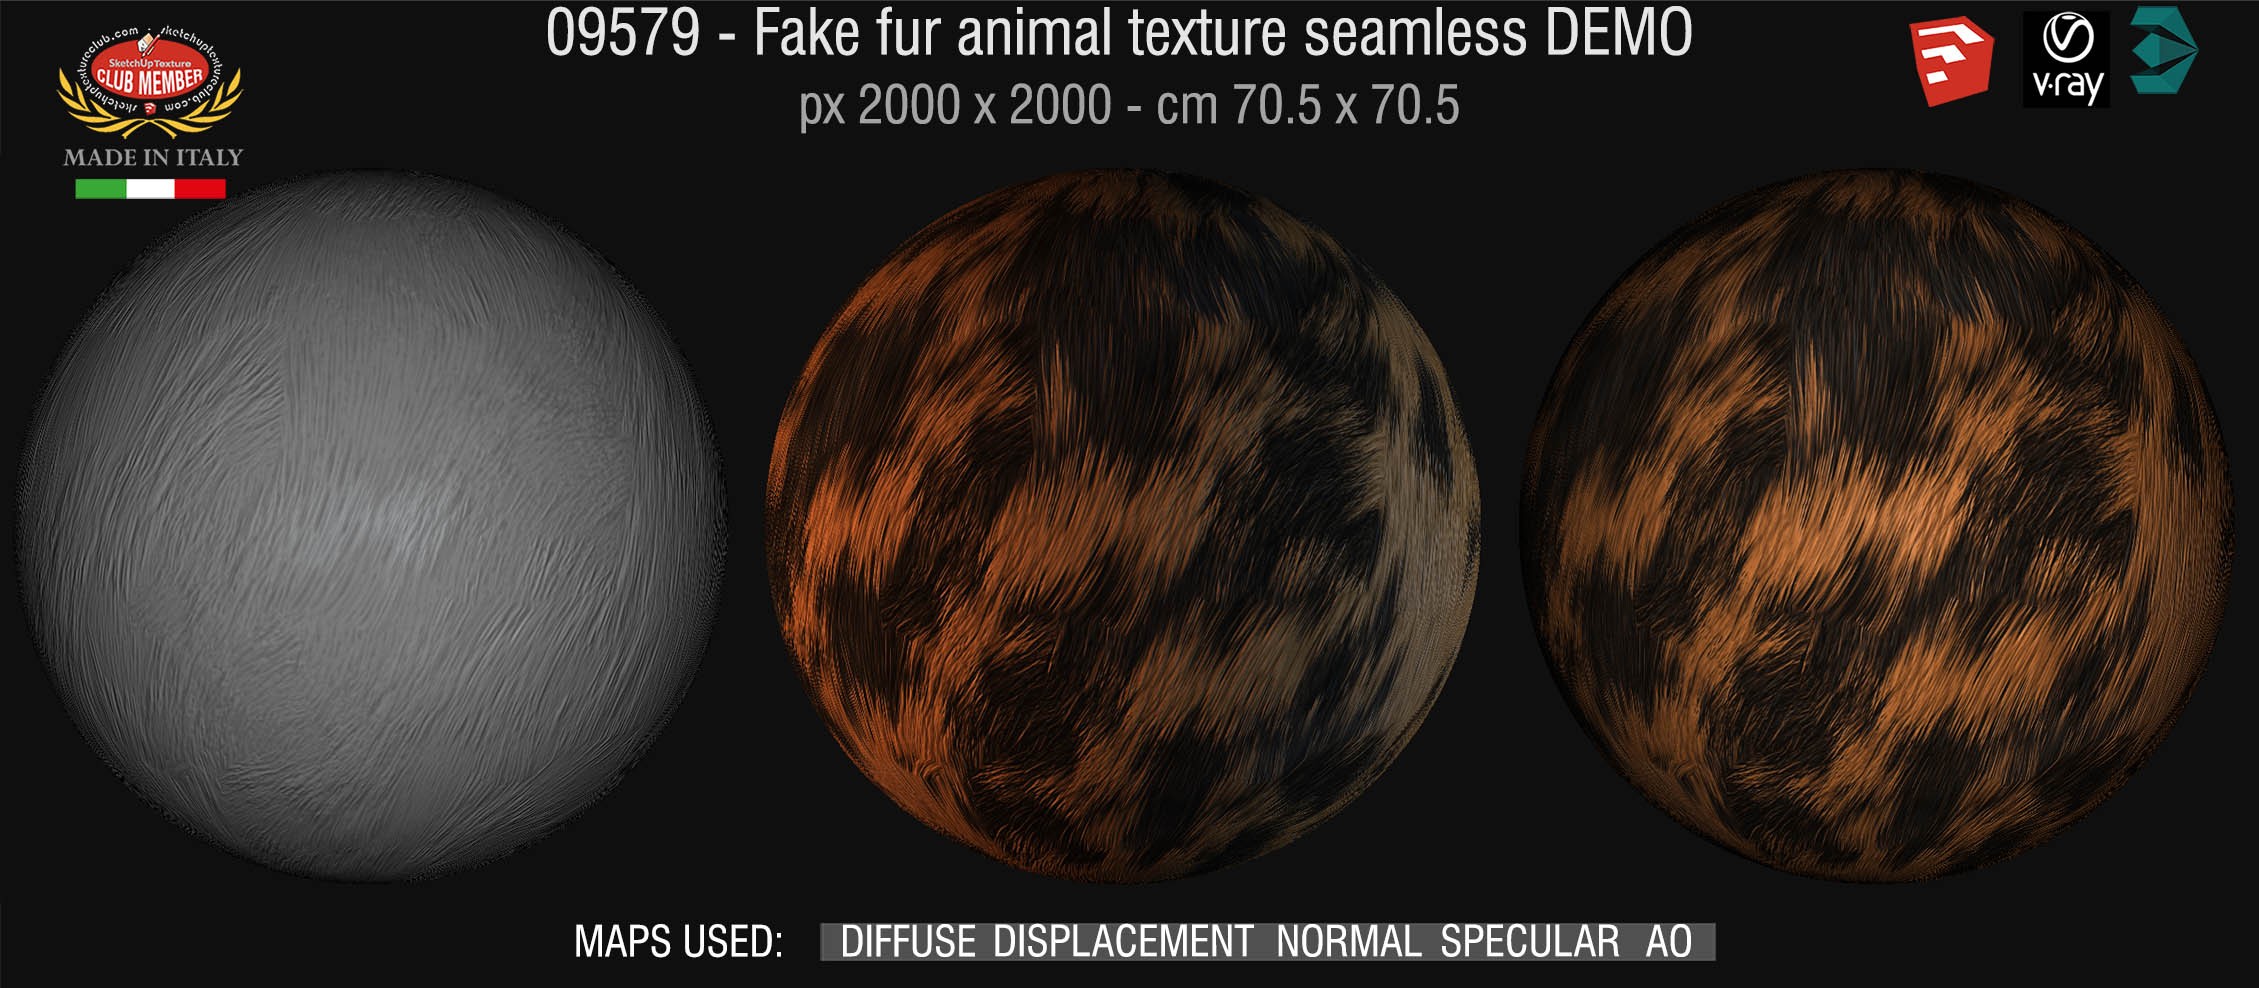 095879 HR fake fur animal texture seamless + maps DEMO